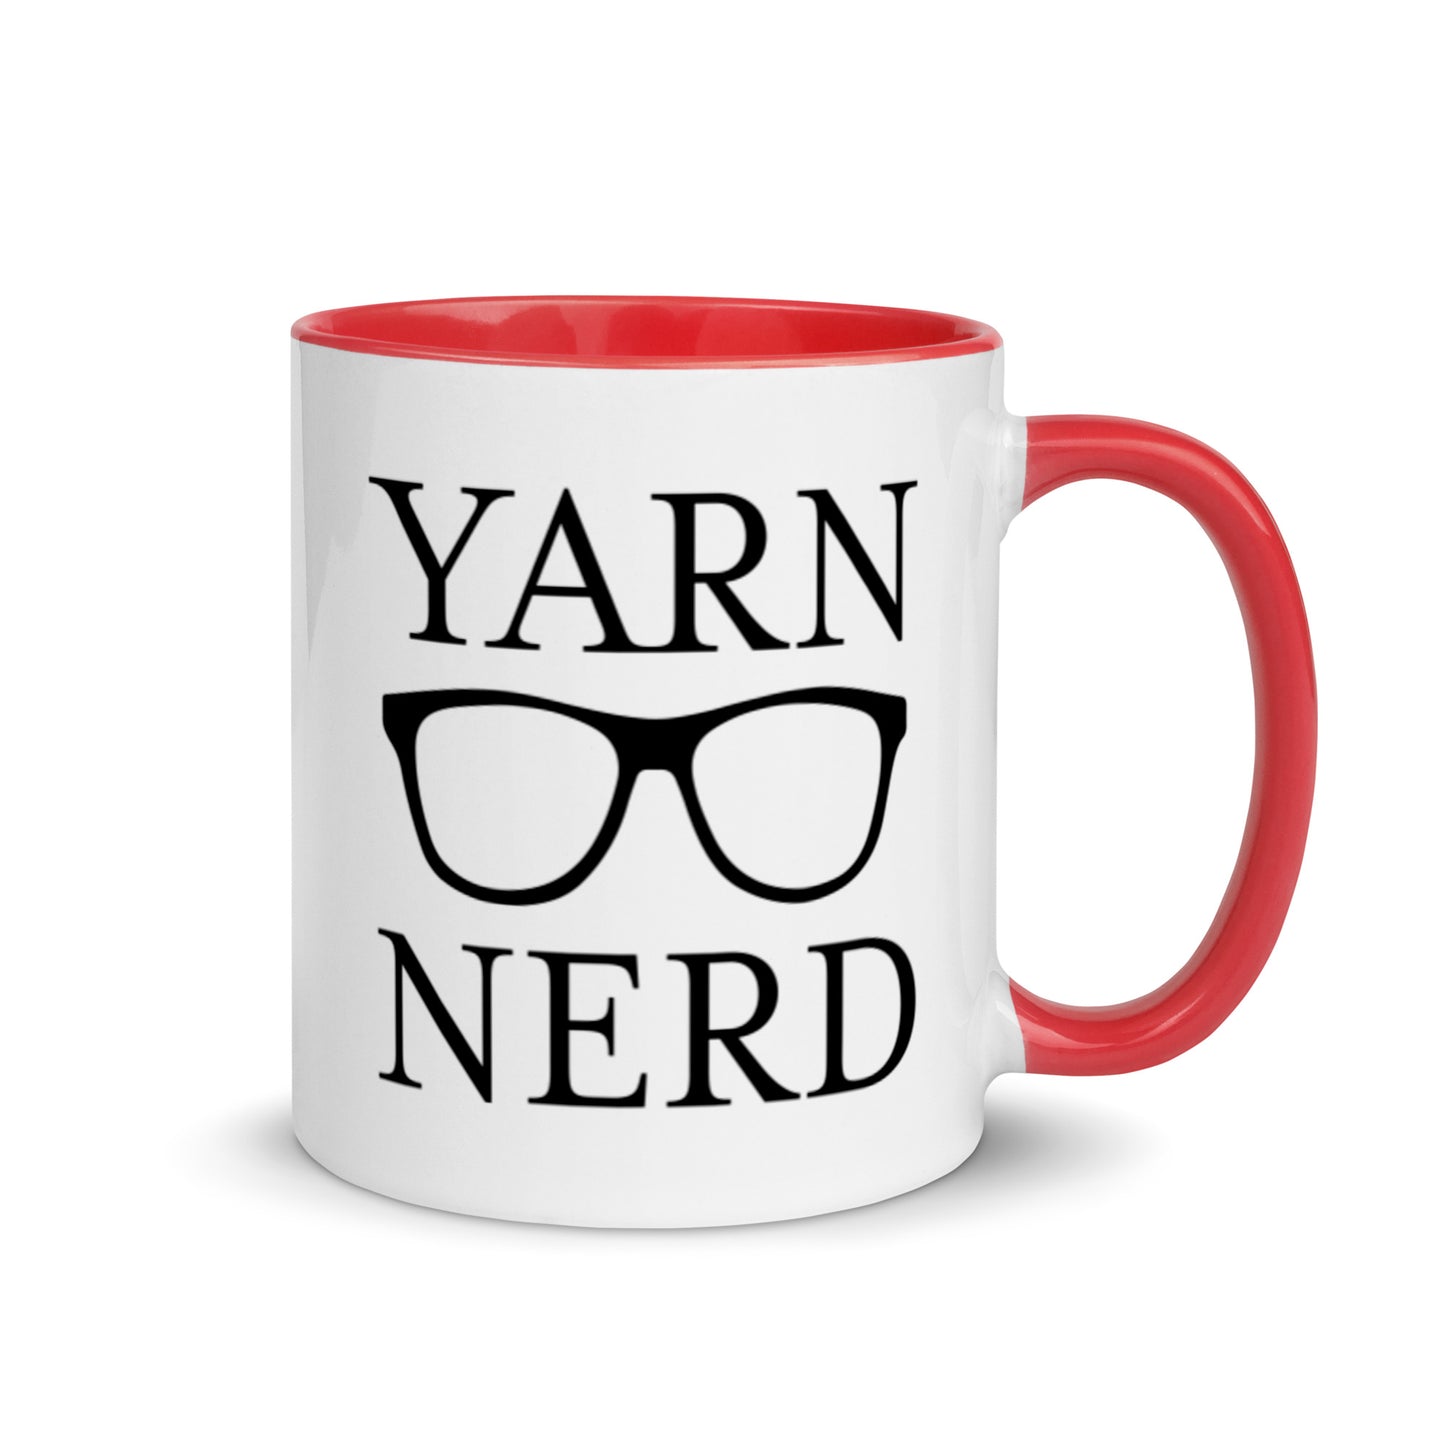 Yarn Nerd - Mug